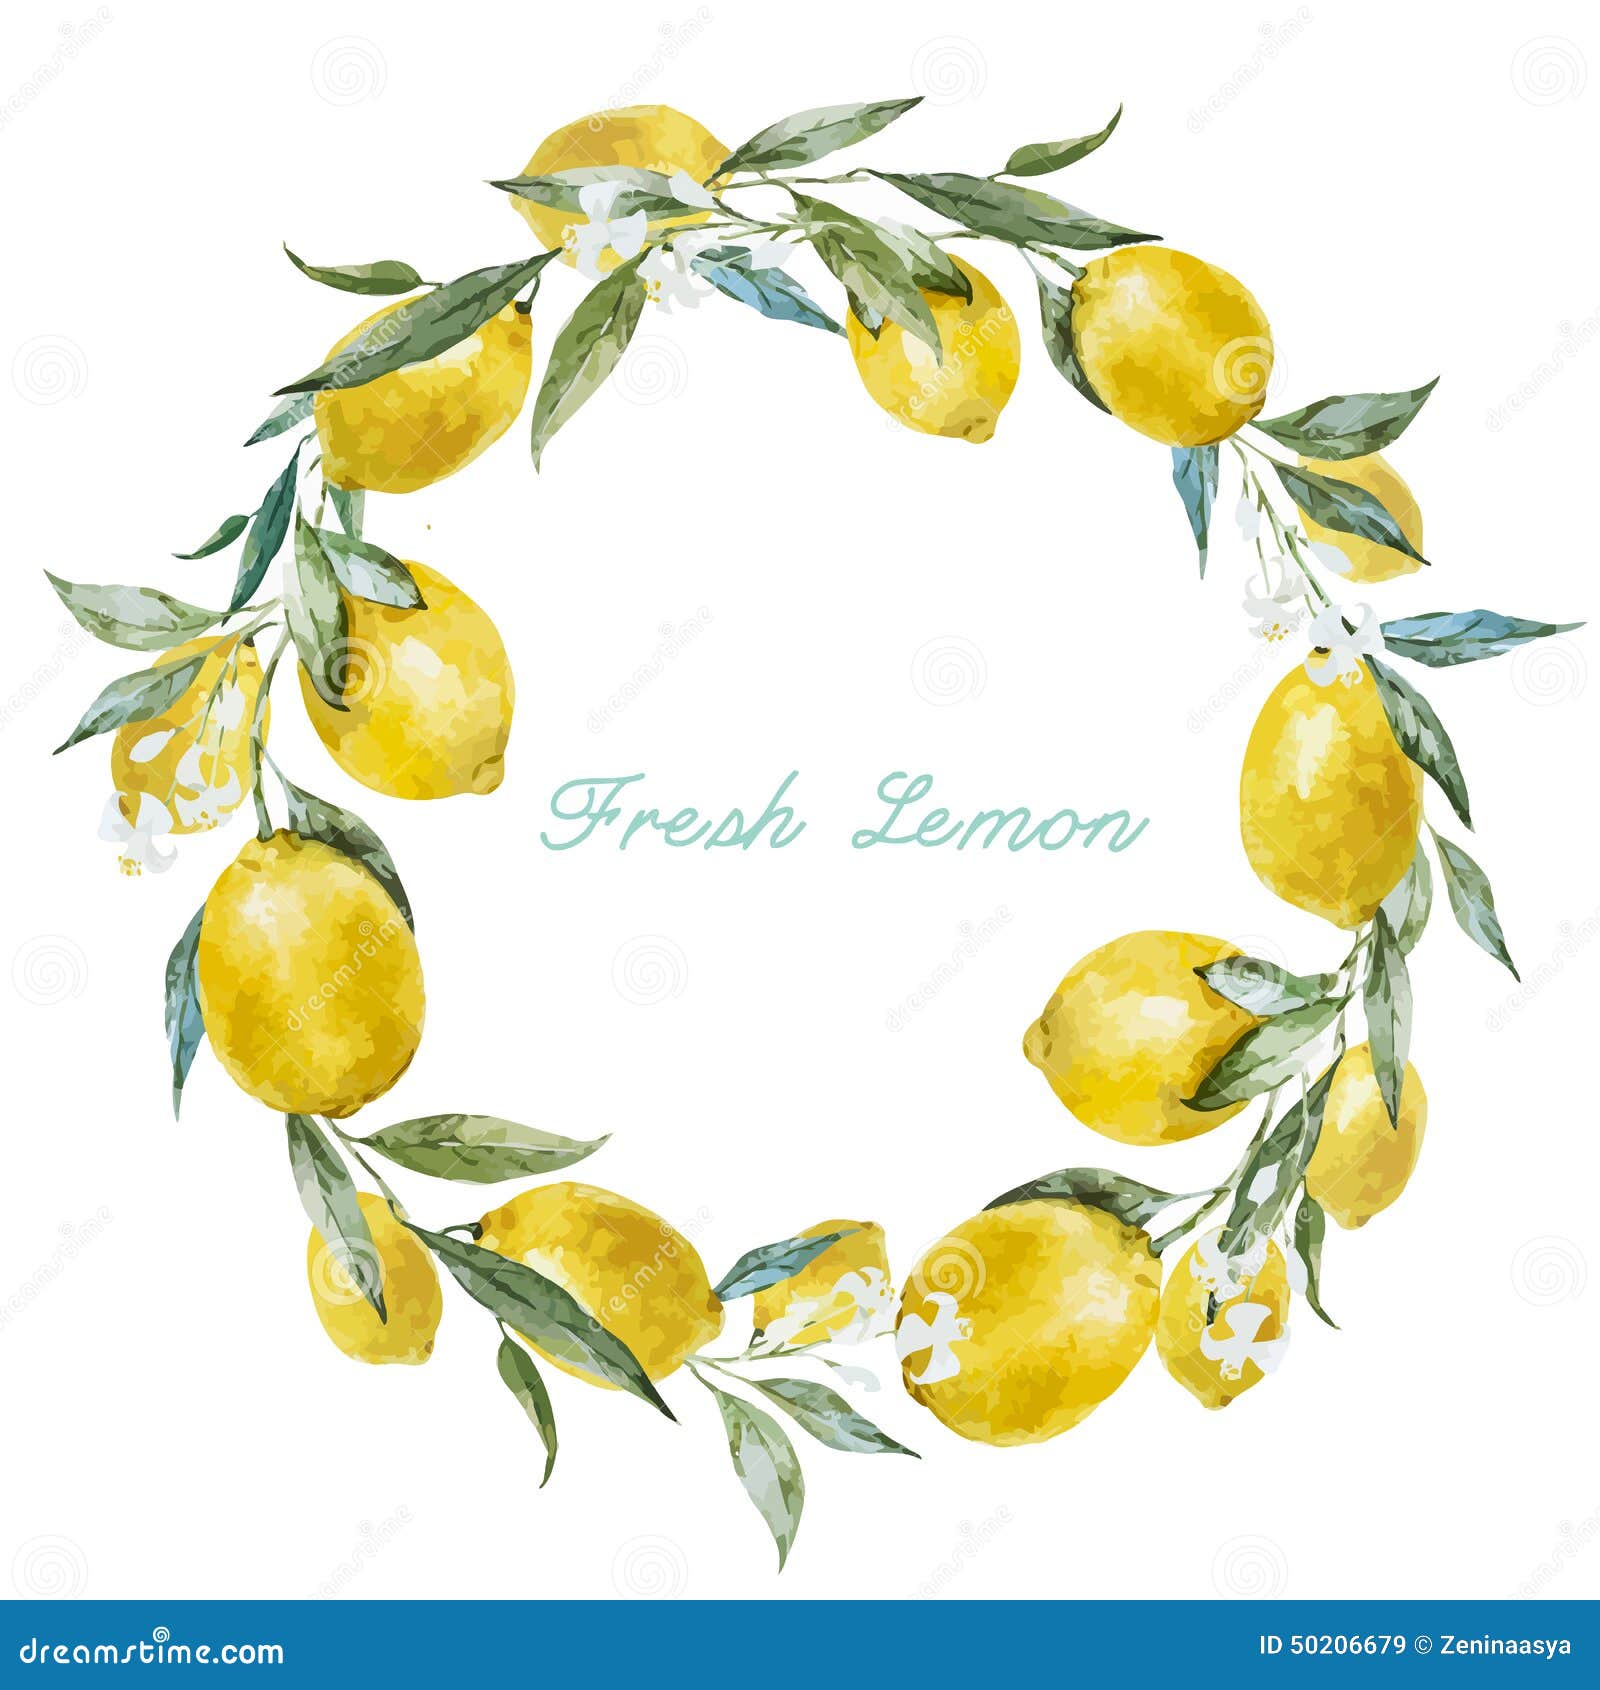 yellow lemon clipart - photo #50